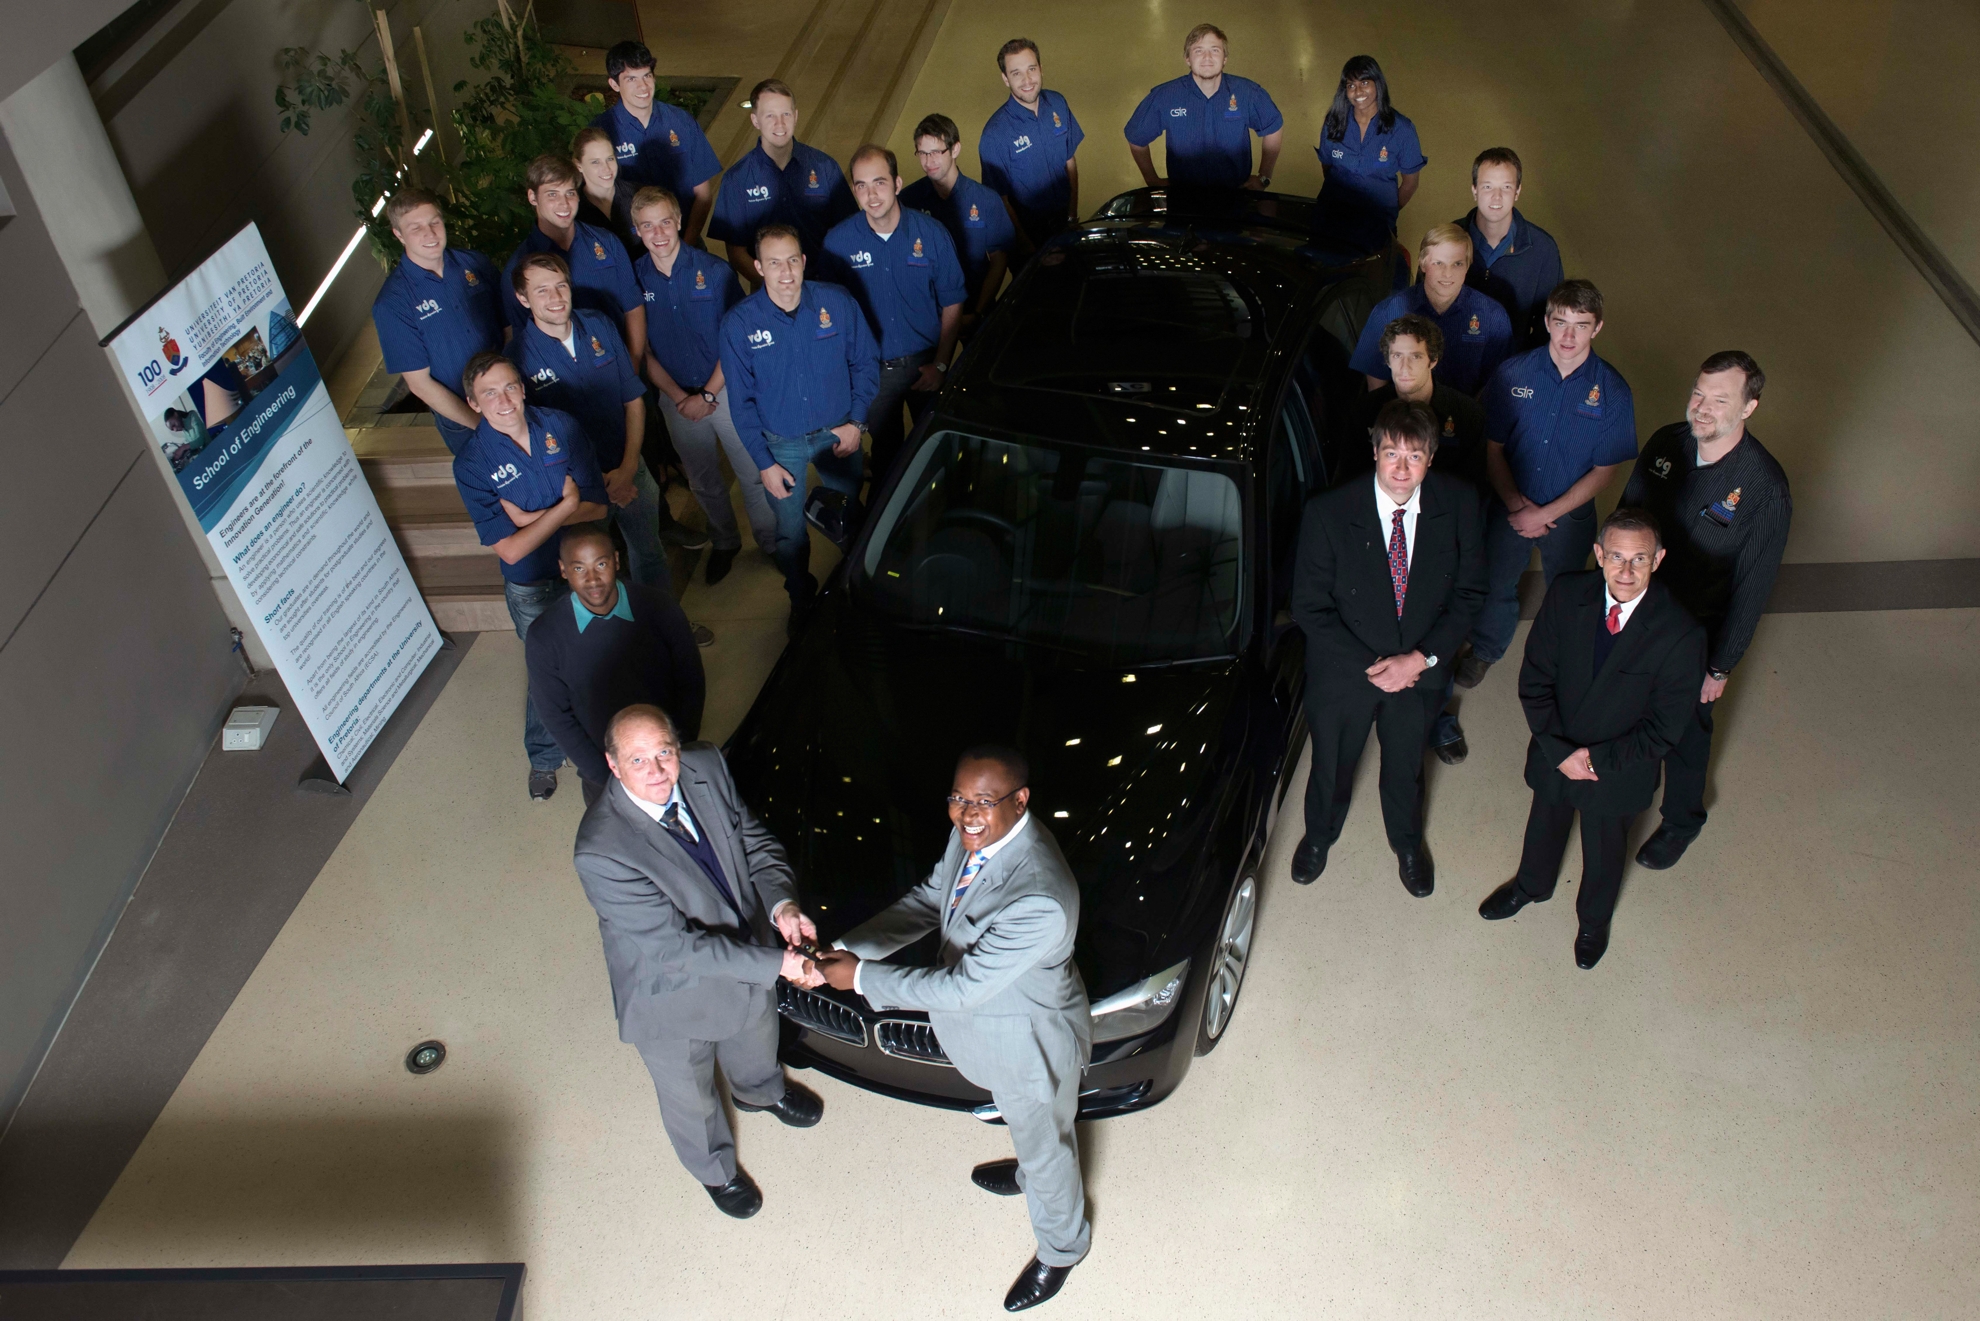 BMW South Africa donates educational car to the University of Pretoria.